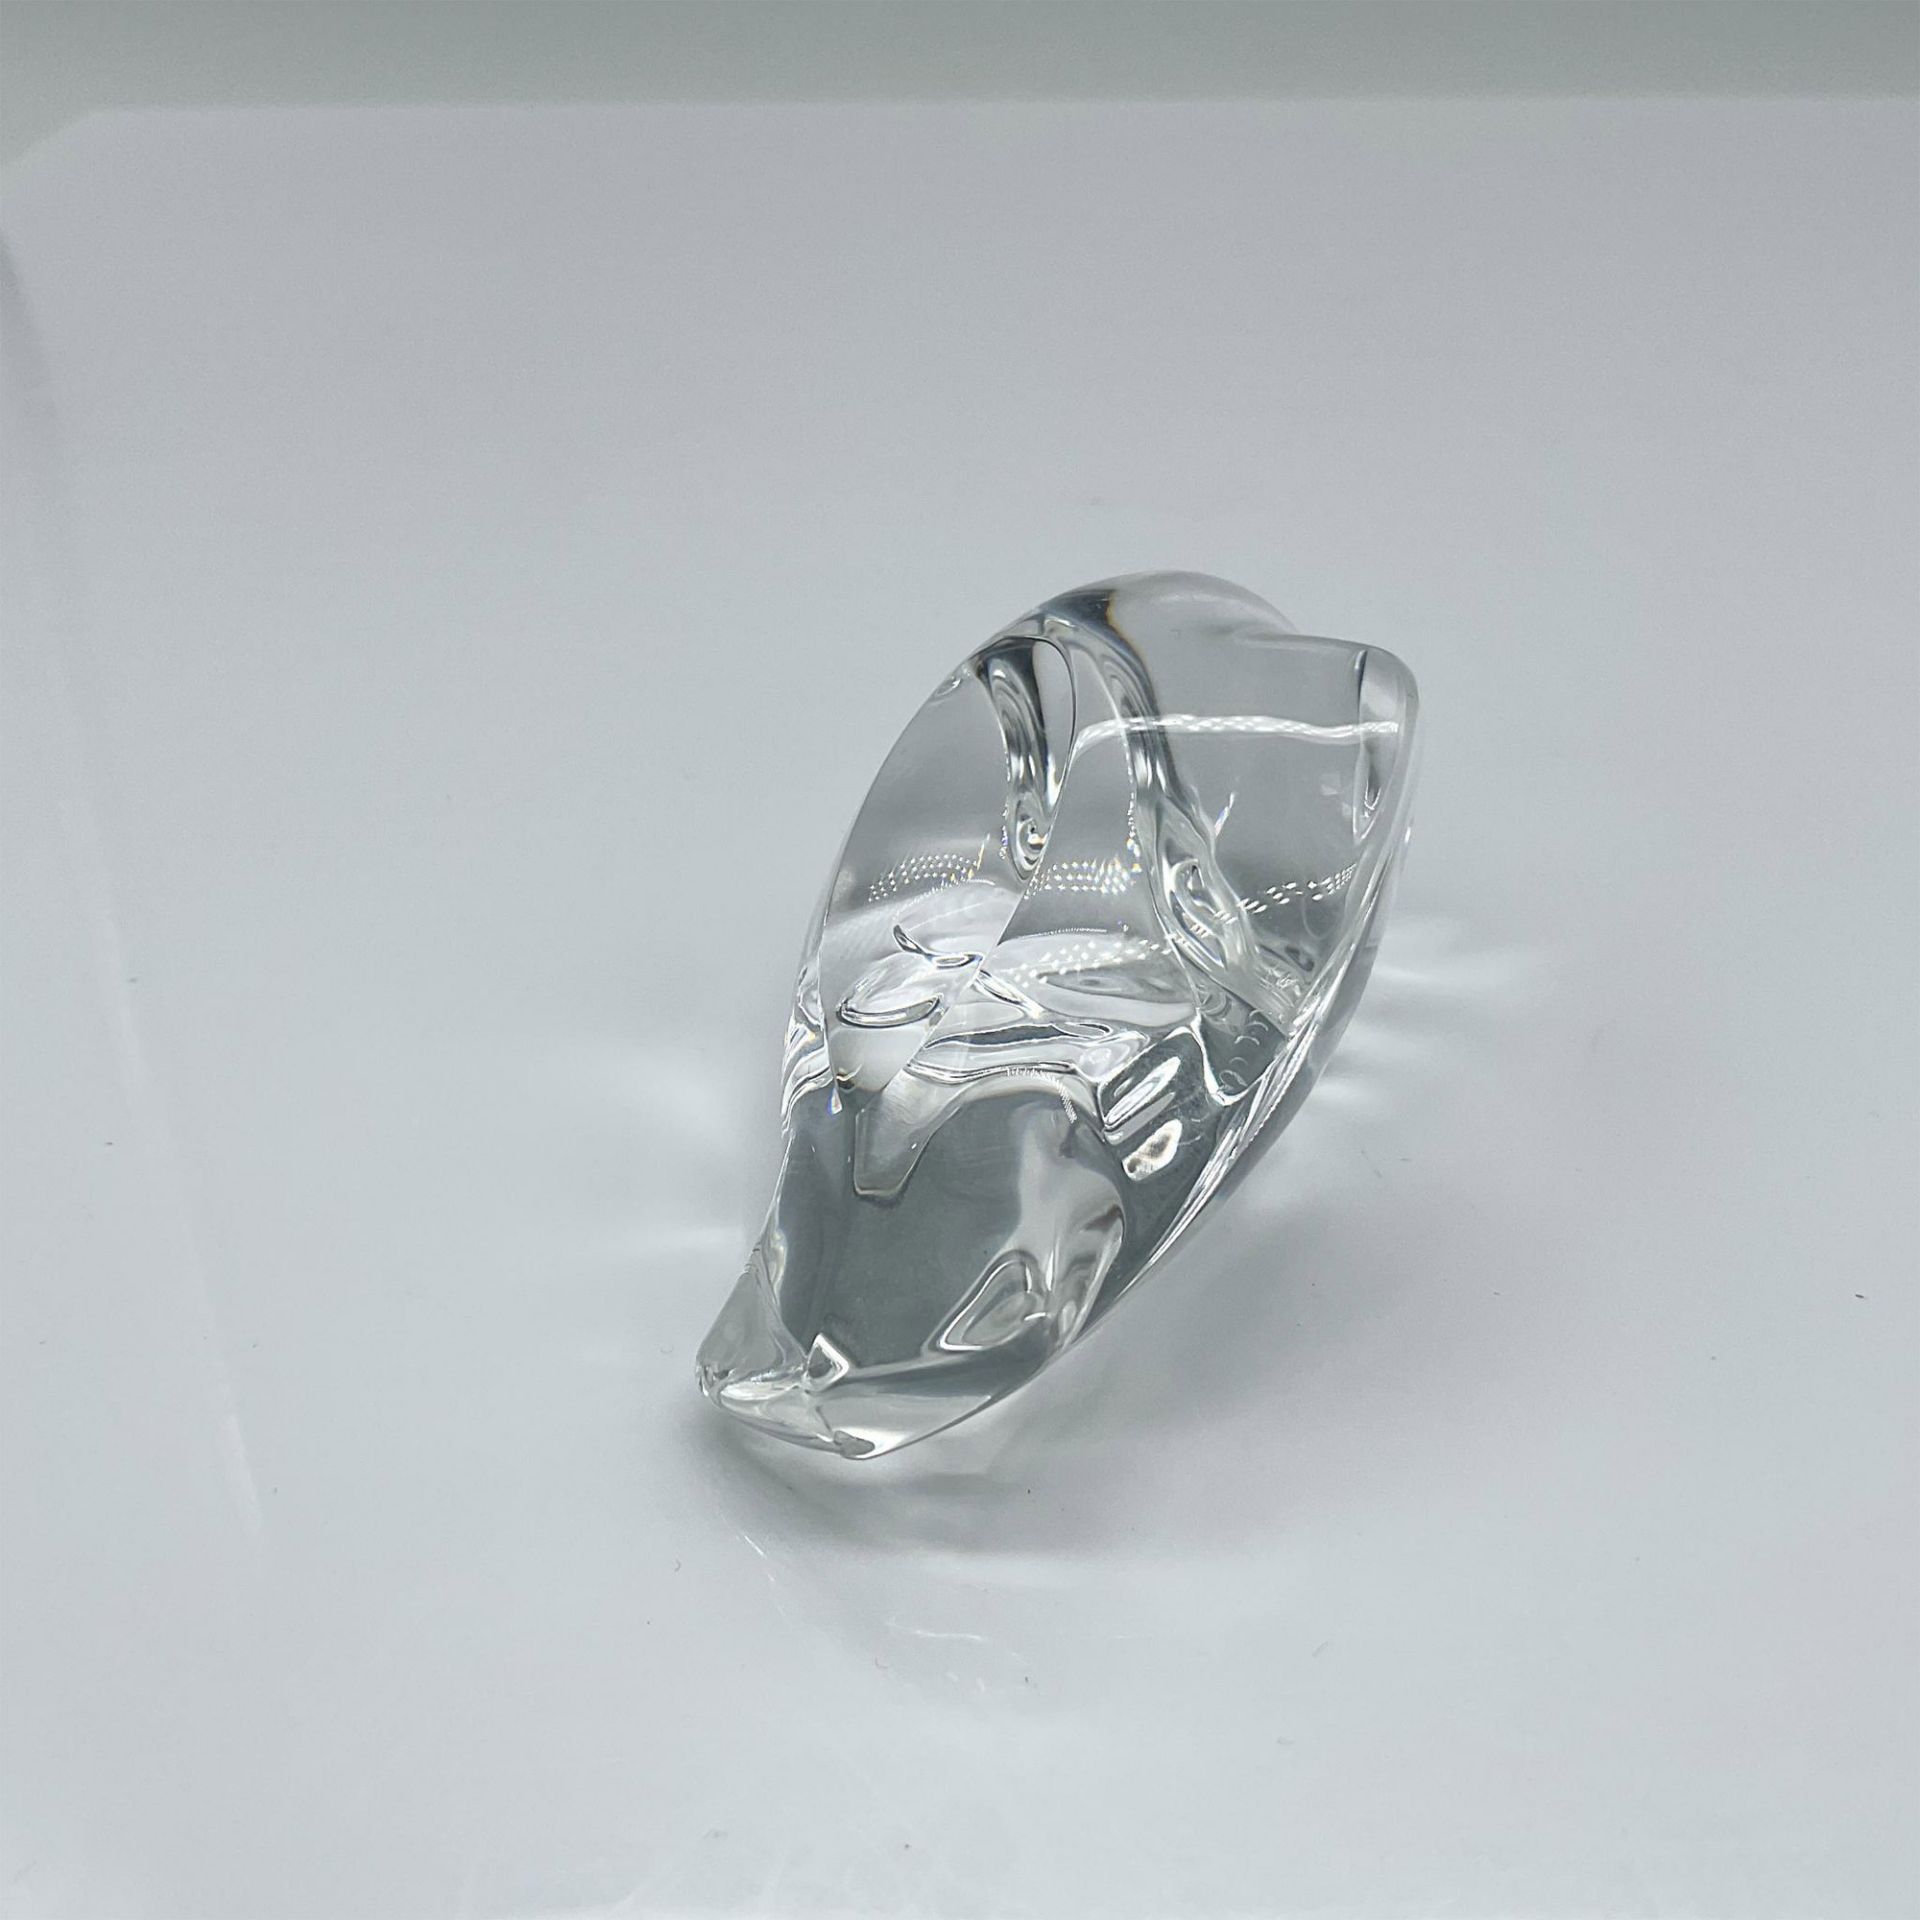 Steuben Glass Animal Hand Cooler, Dove - Image 3 of 3